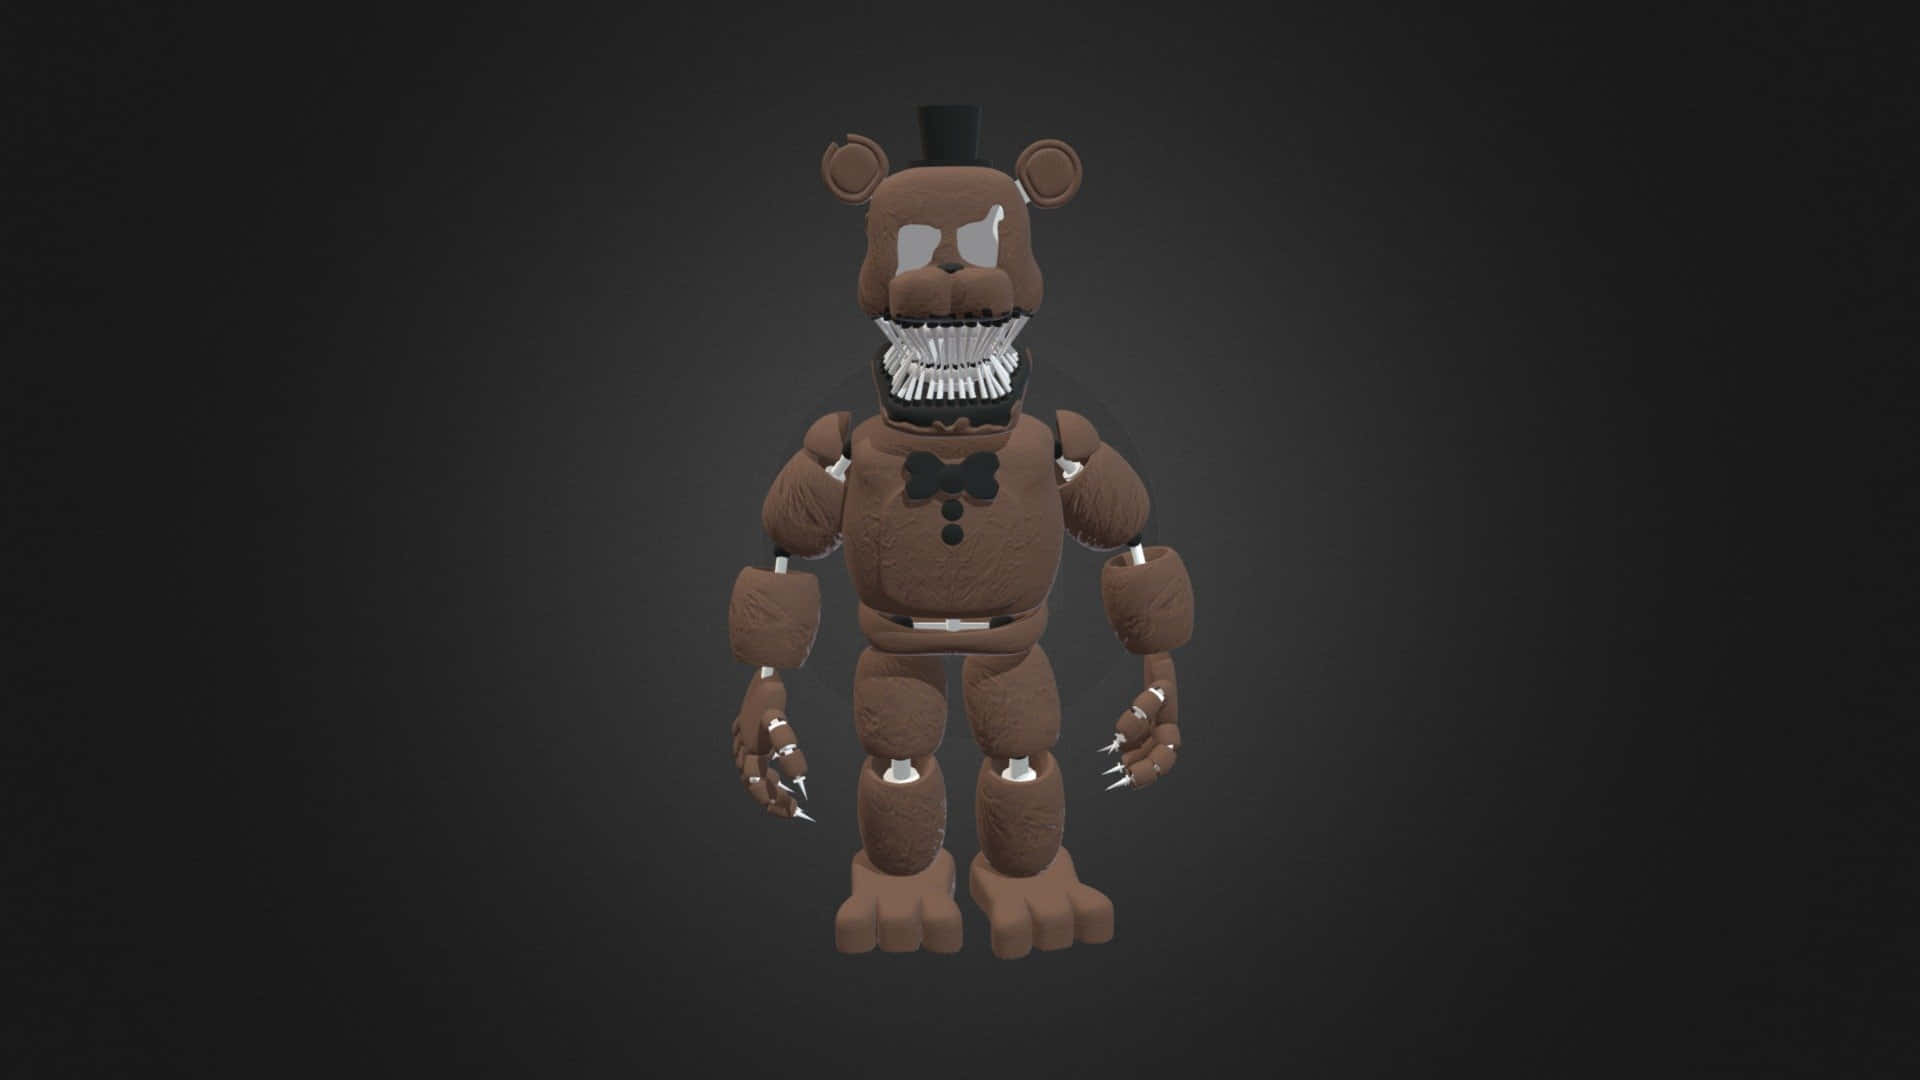 En3d-modell Av En Five Nights At Freddy's-björn